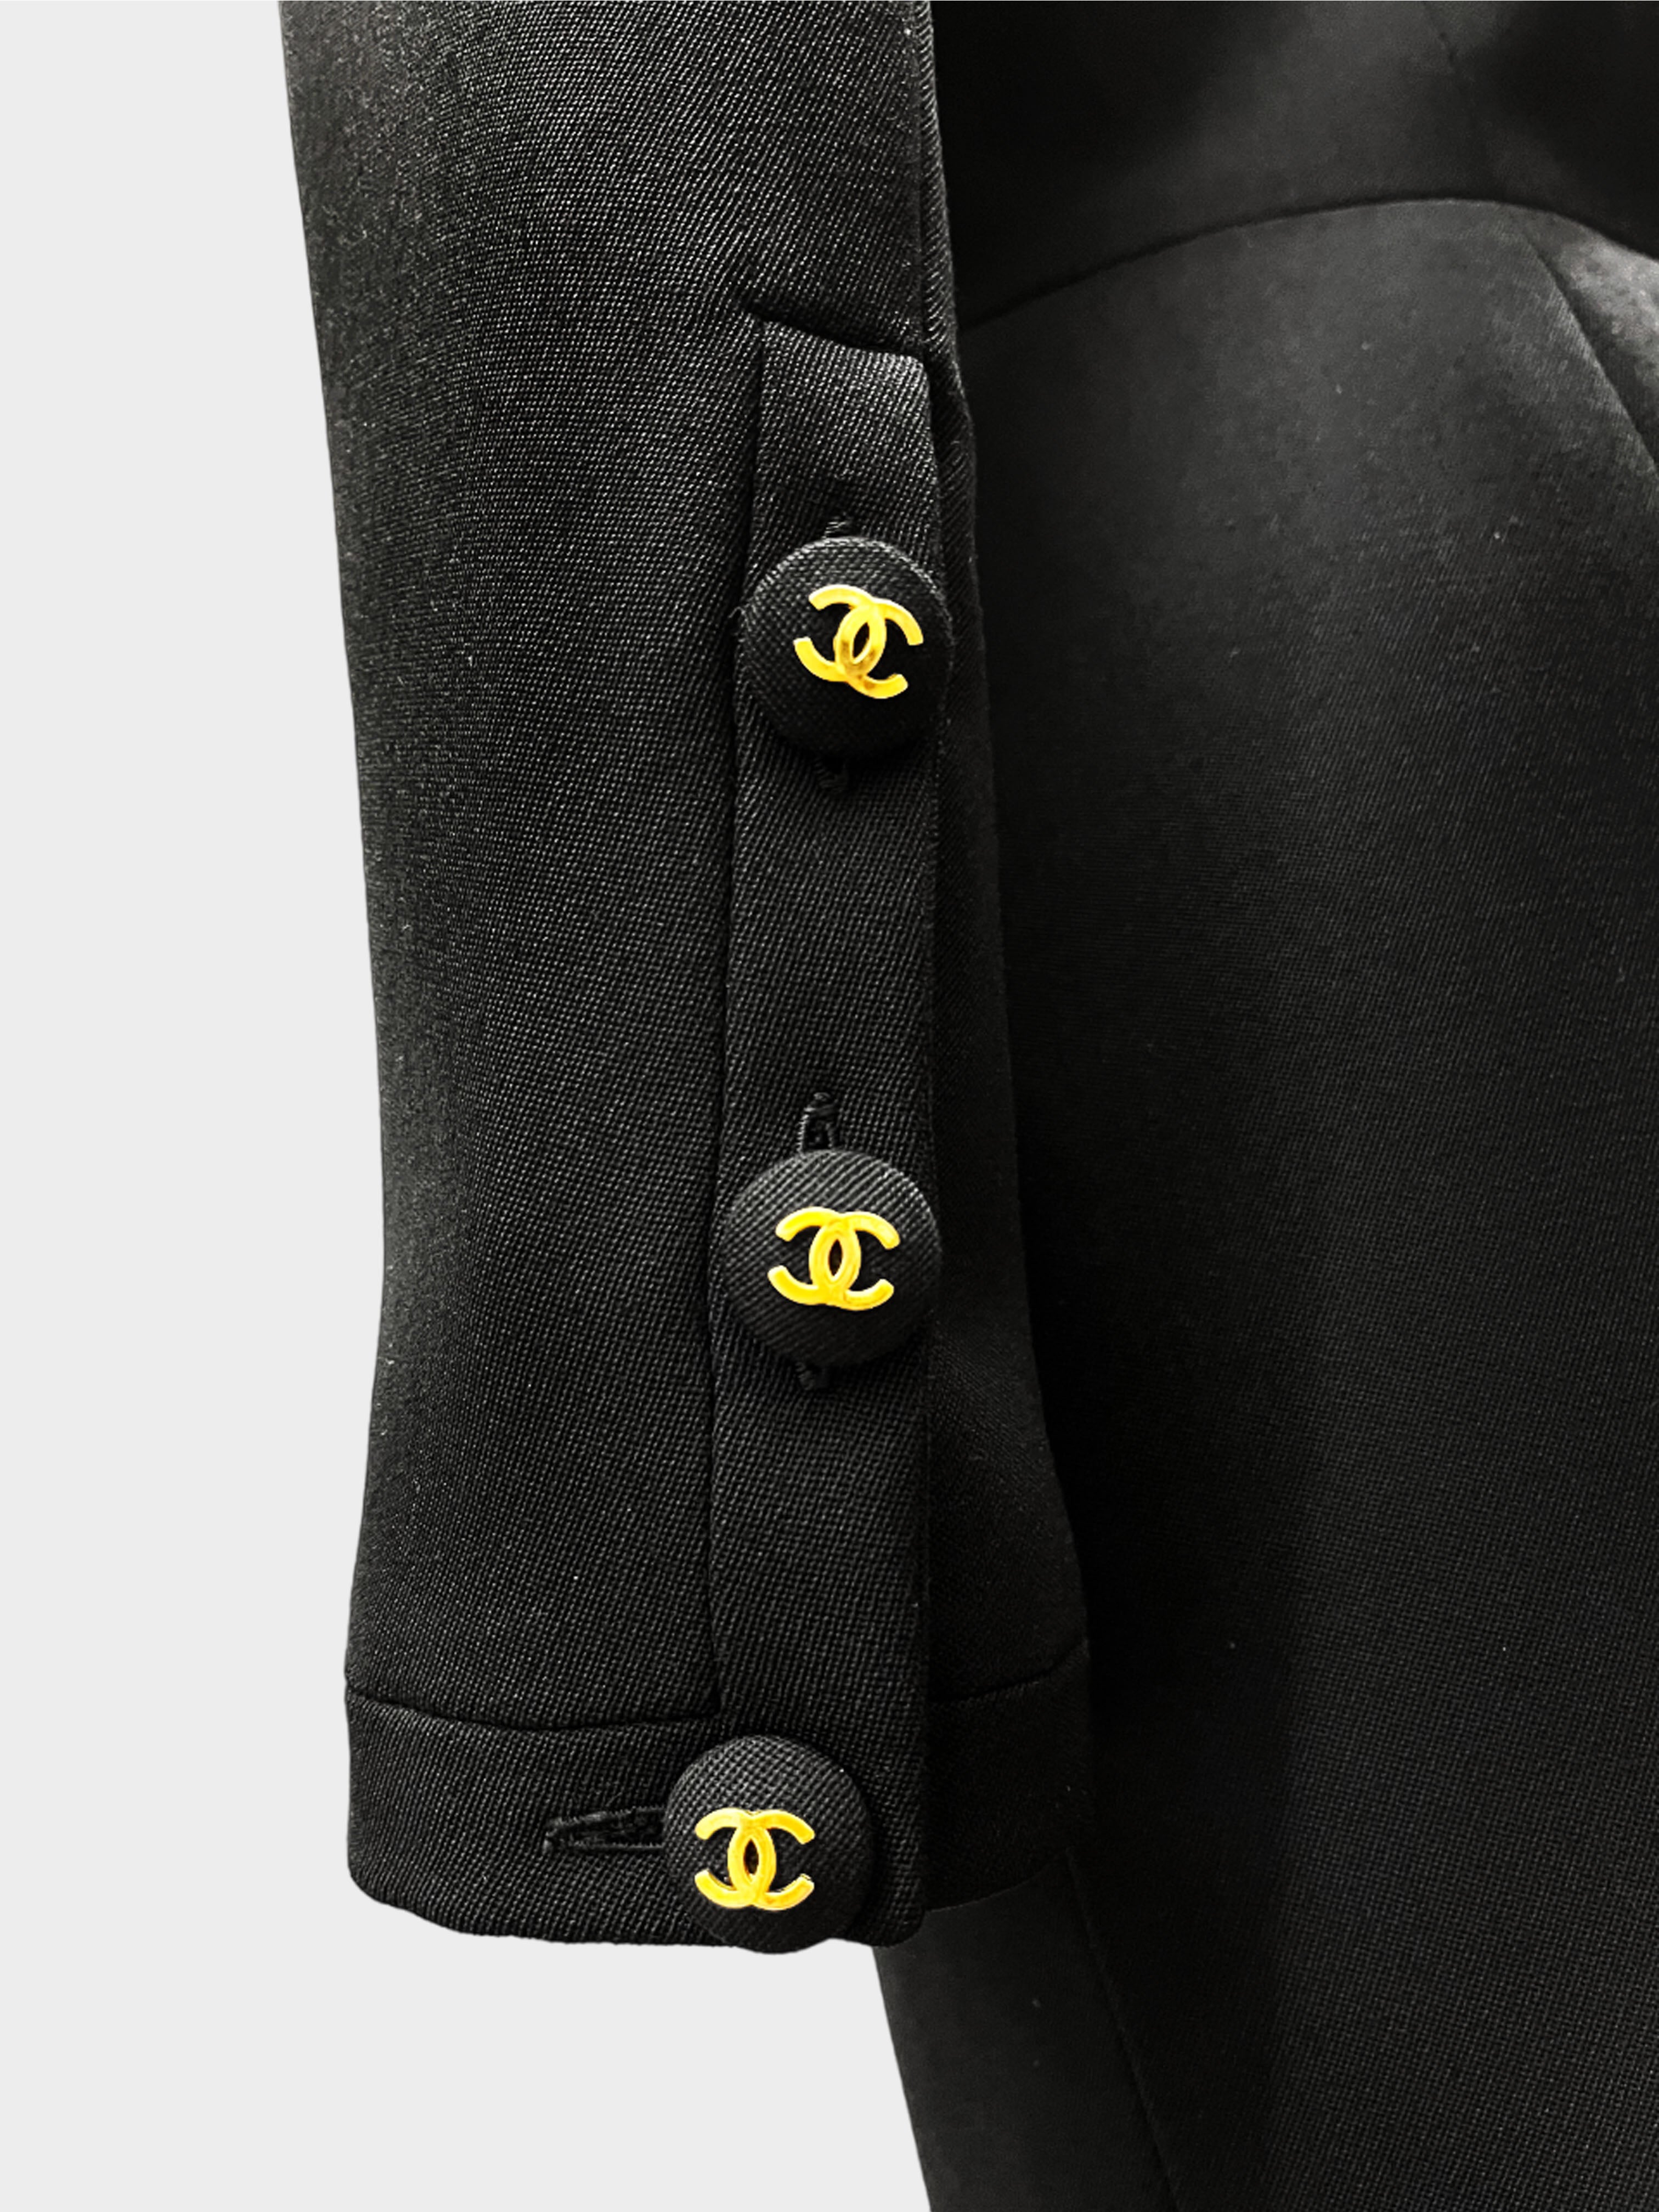 Chanel 1990s Black Wool Coat Dress with Belt